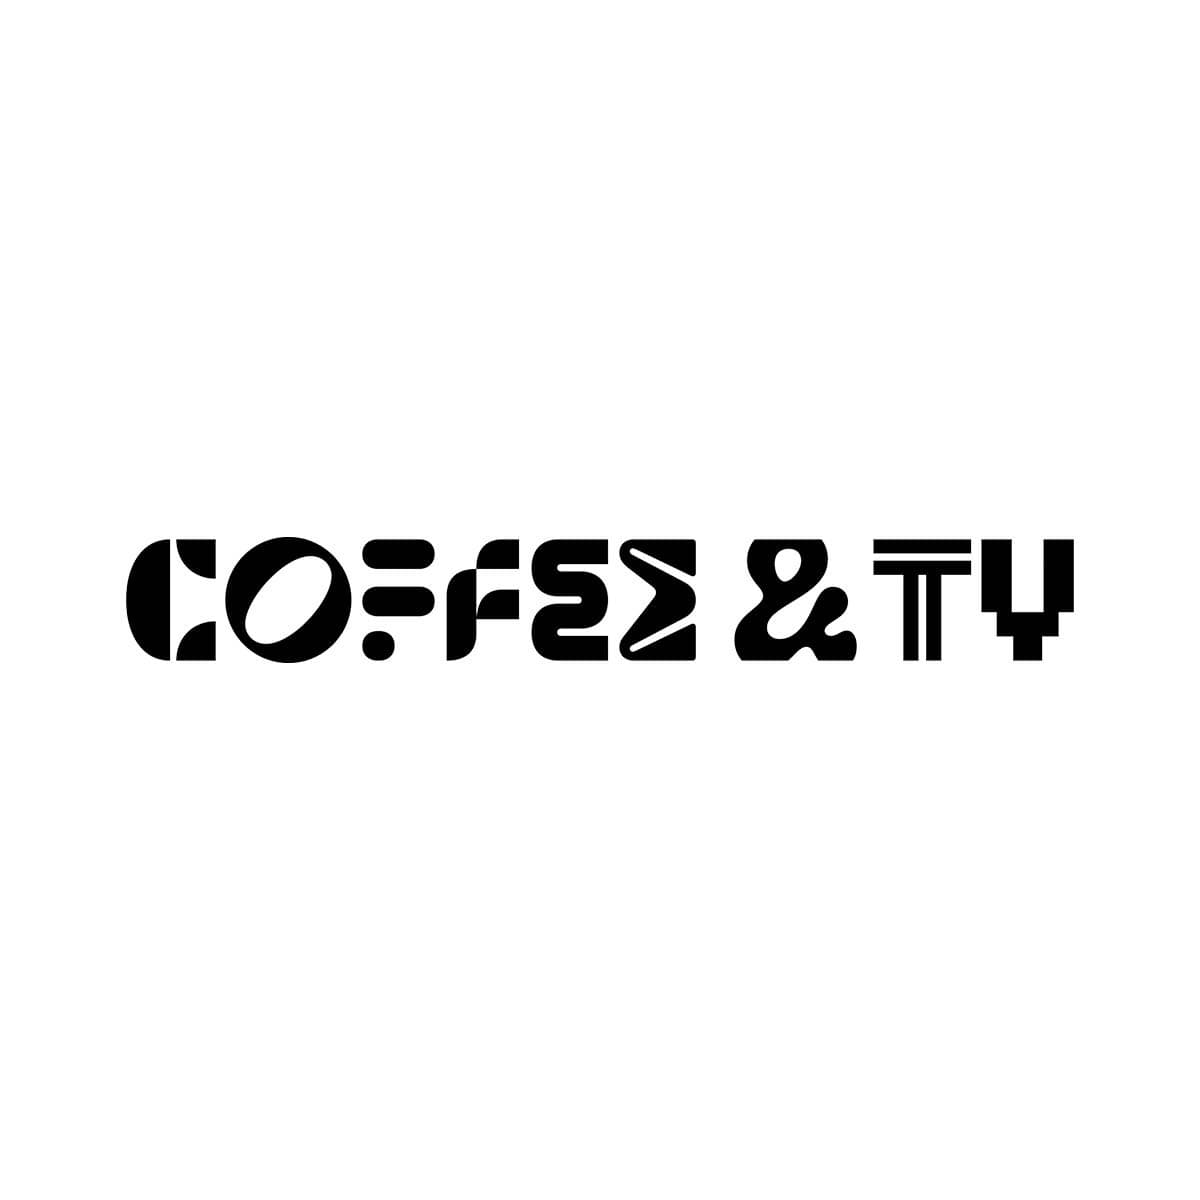 Coffee & TV logo